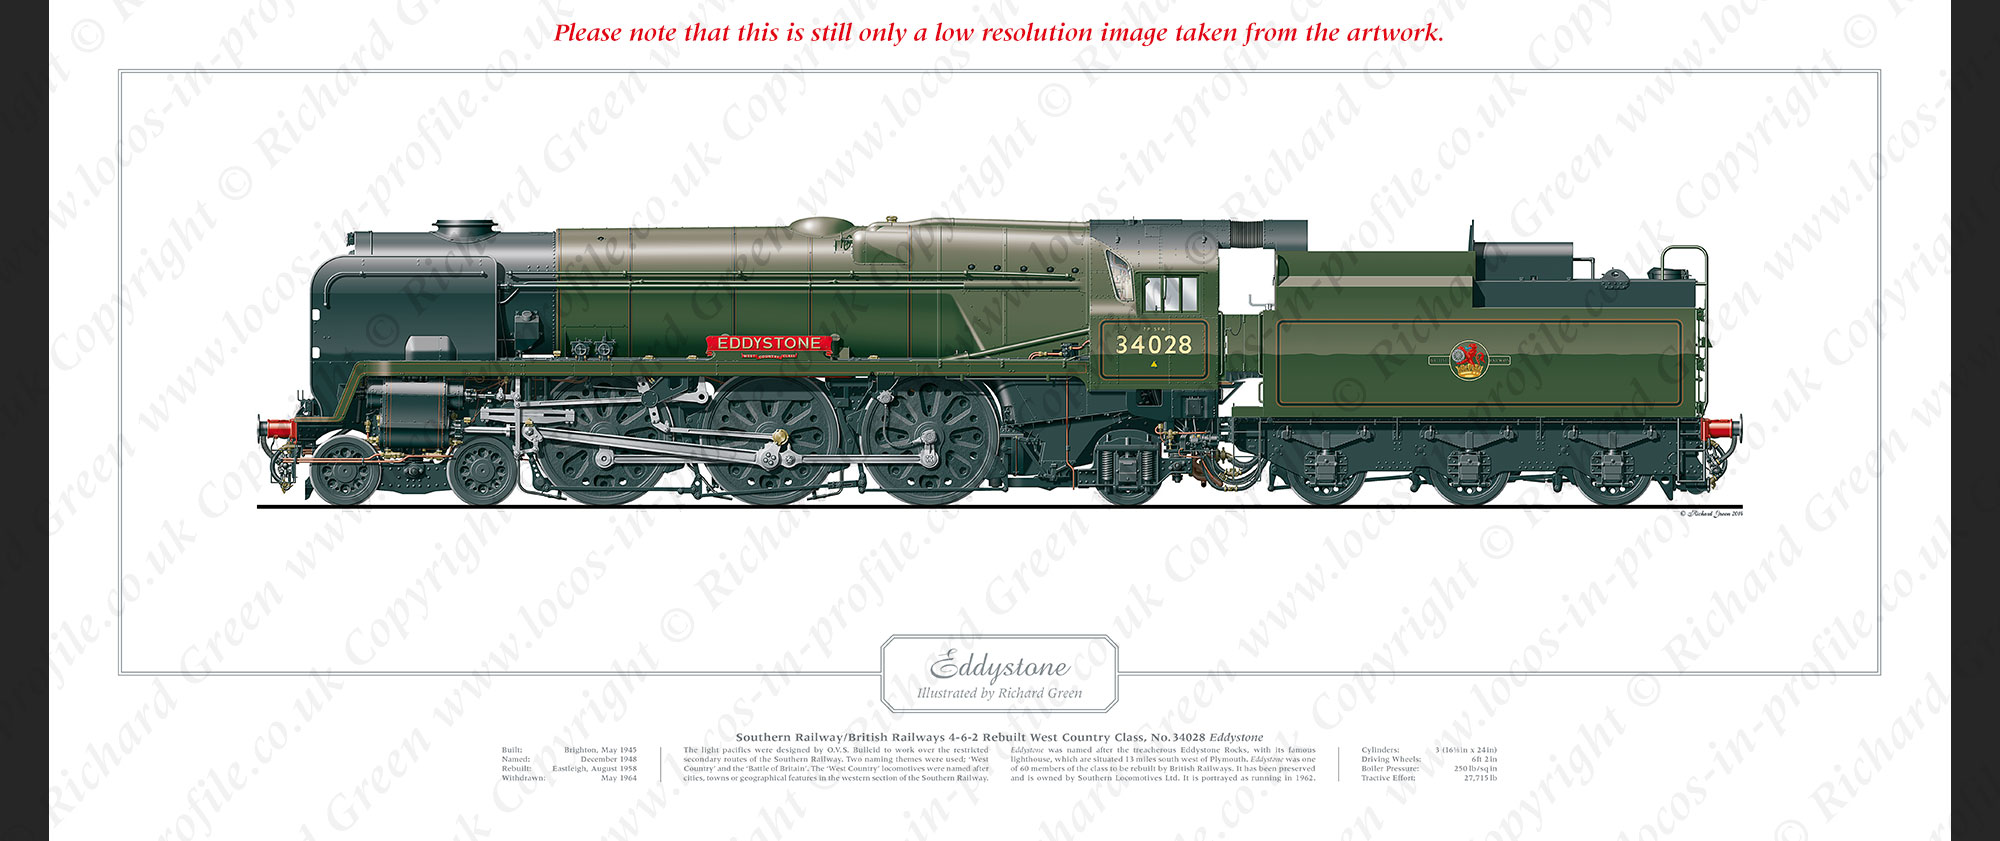 R/BR Rebuilt West Country (Light Pacific) Class No. 34028 Eddystone (O V S Bulleid / R G Jarvis) Steam Locomotive Print